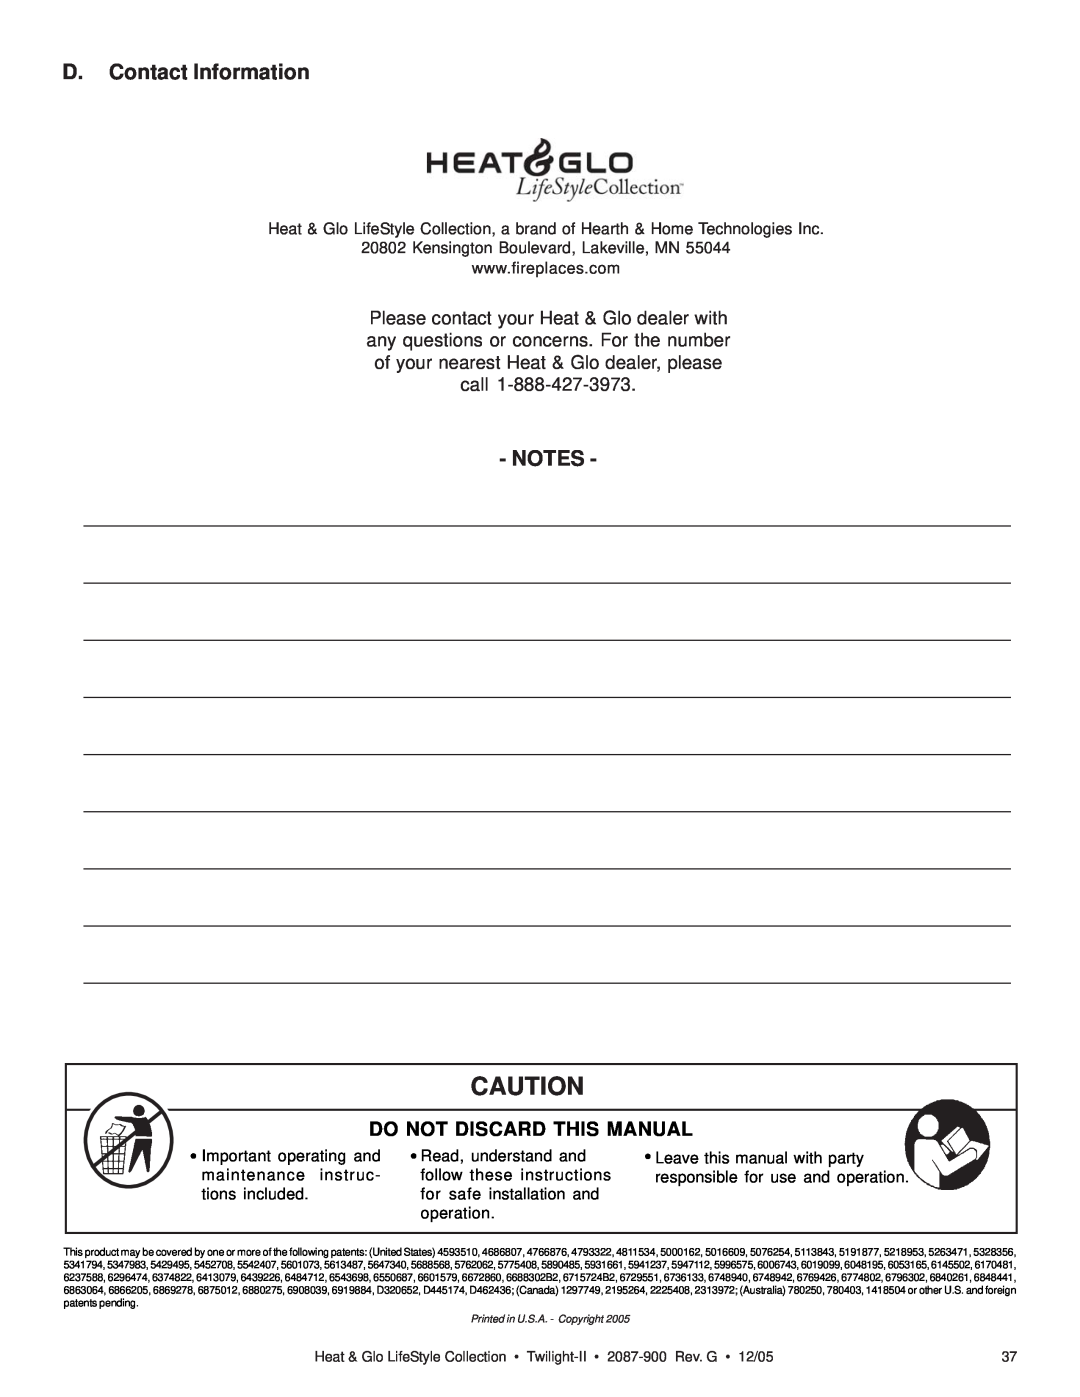 Heat & Glo LifeStyle TWILIGHT-II owner manual D.Contact Information, Kensington Boulevard, Lakeville, MN 